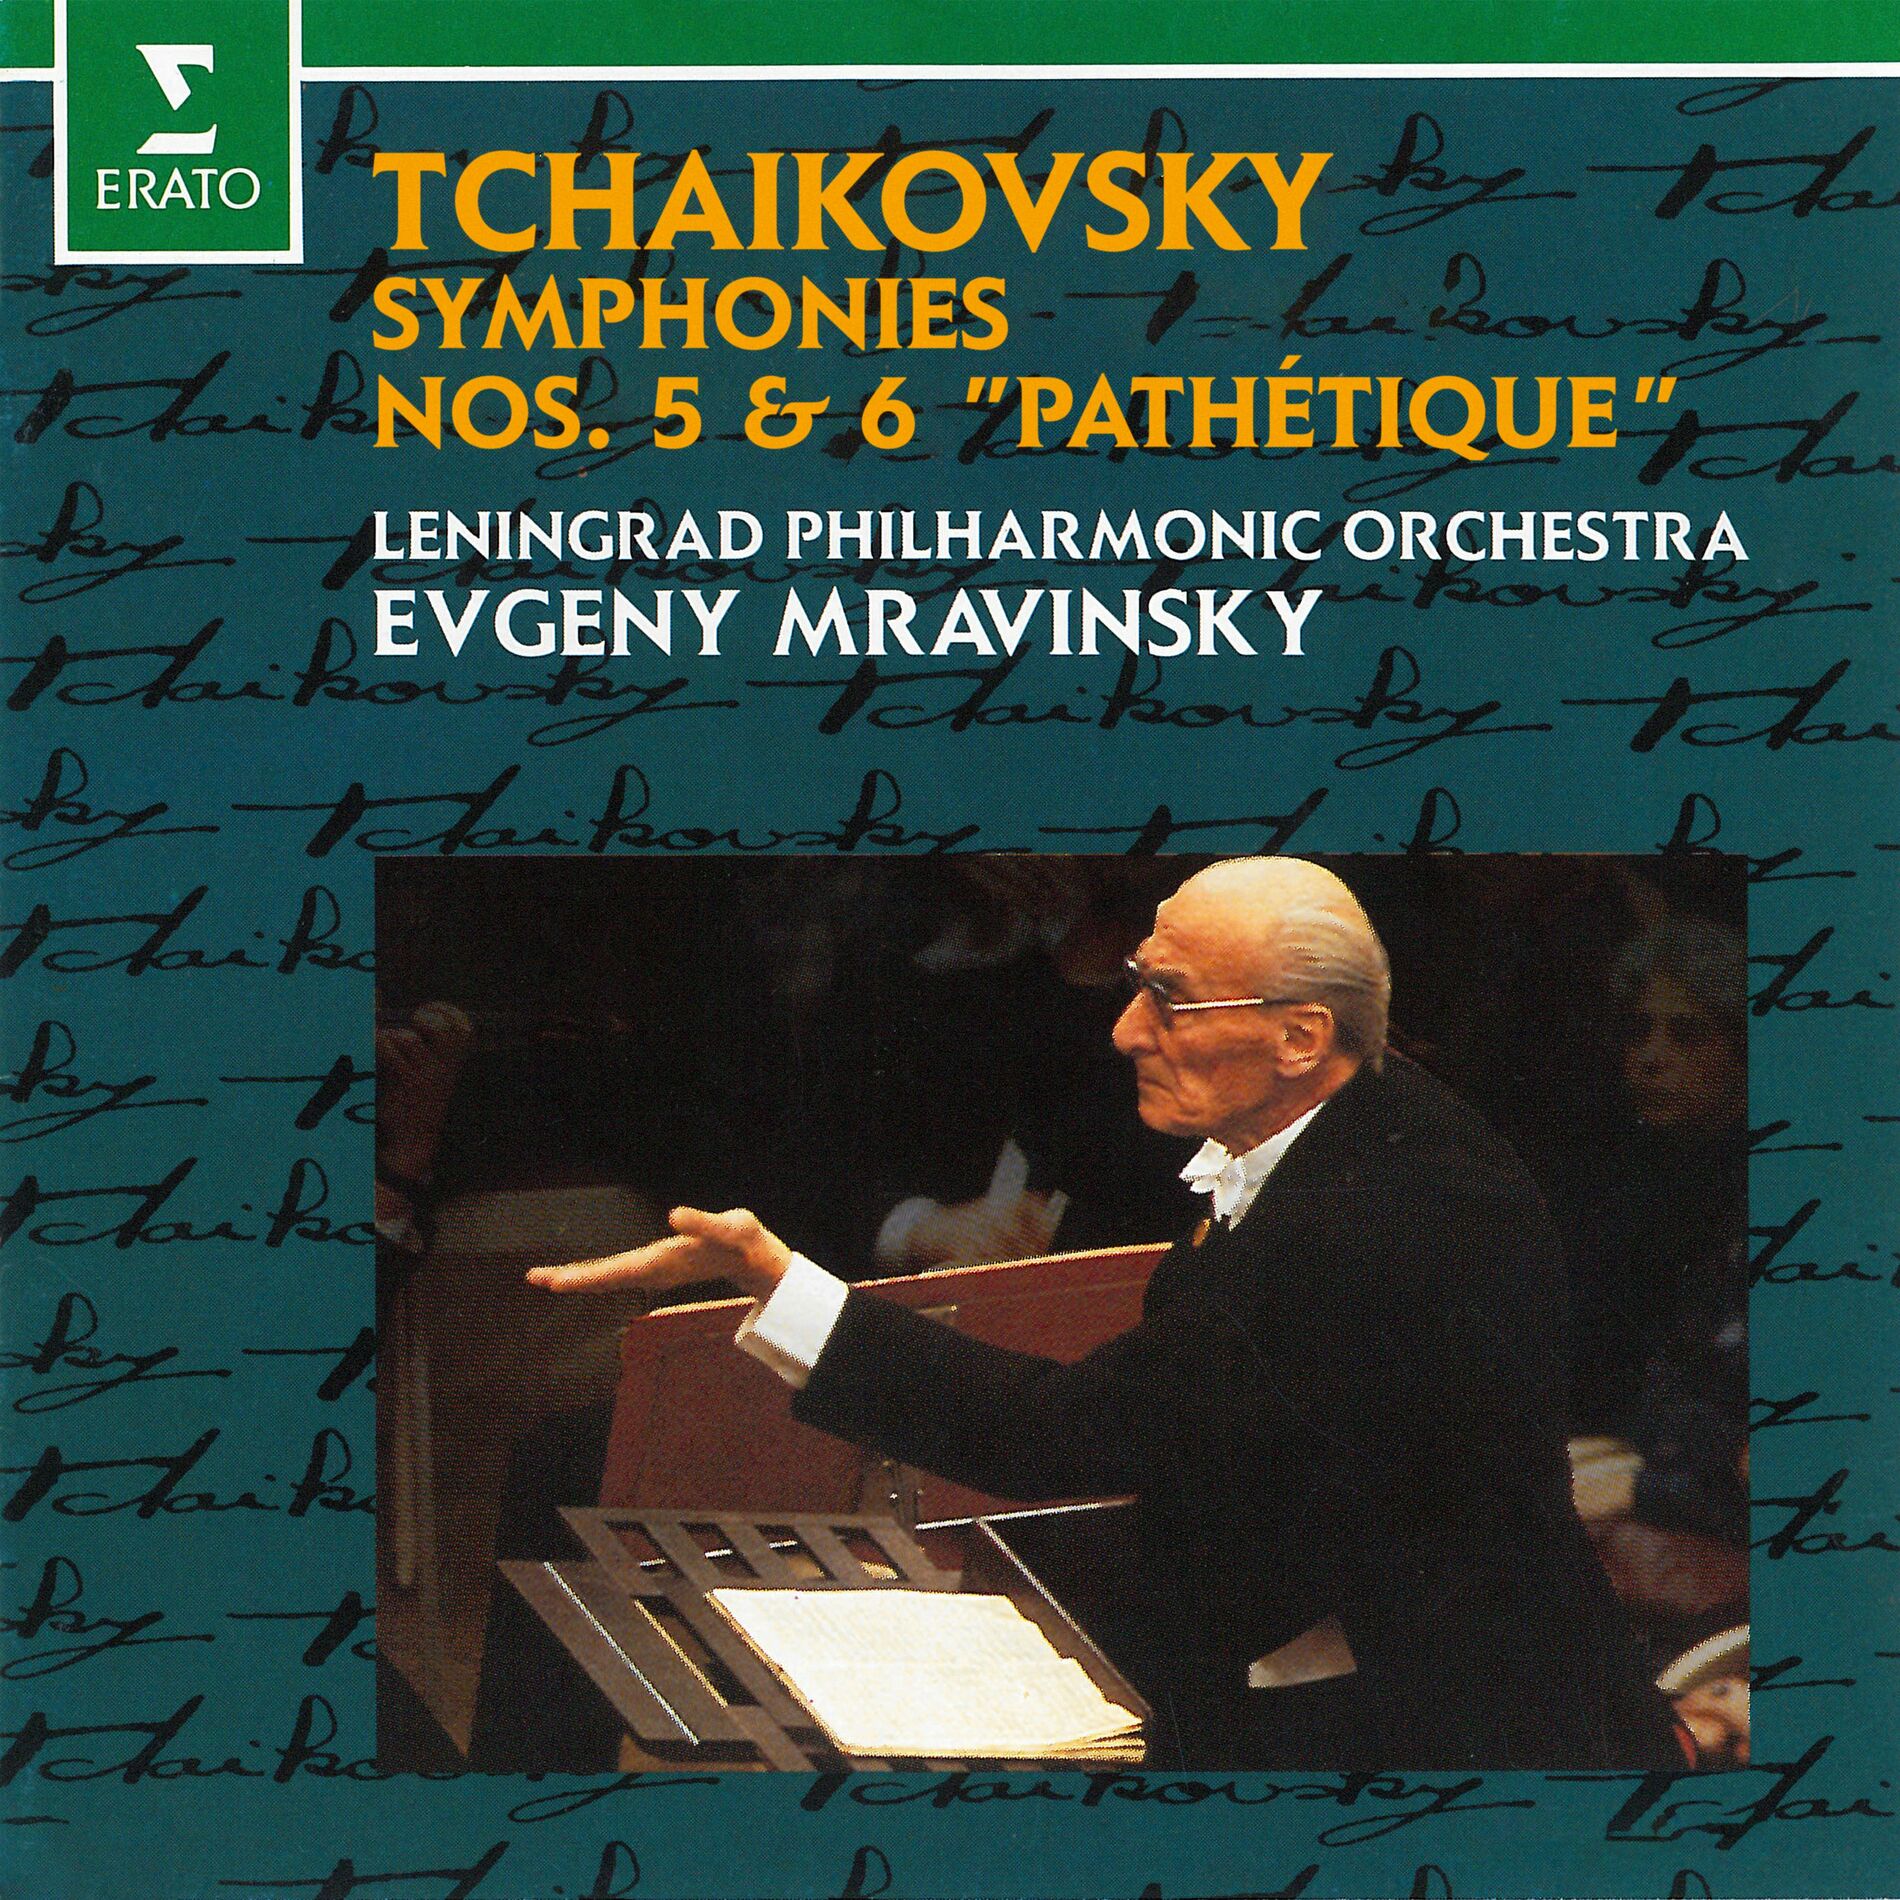 Evgeny Mravinsky: albums, songs, playlists | Listen on Deezer